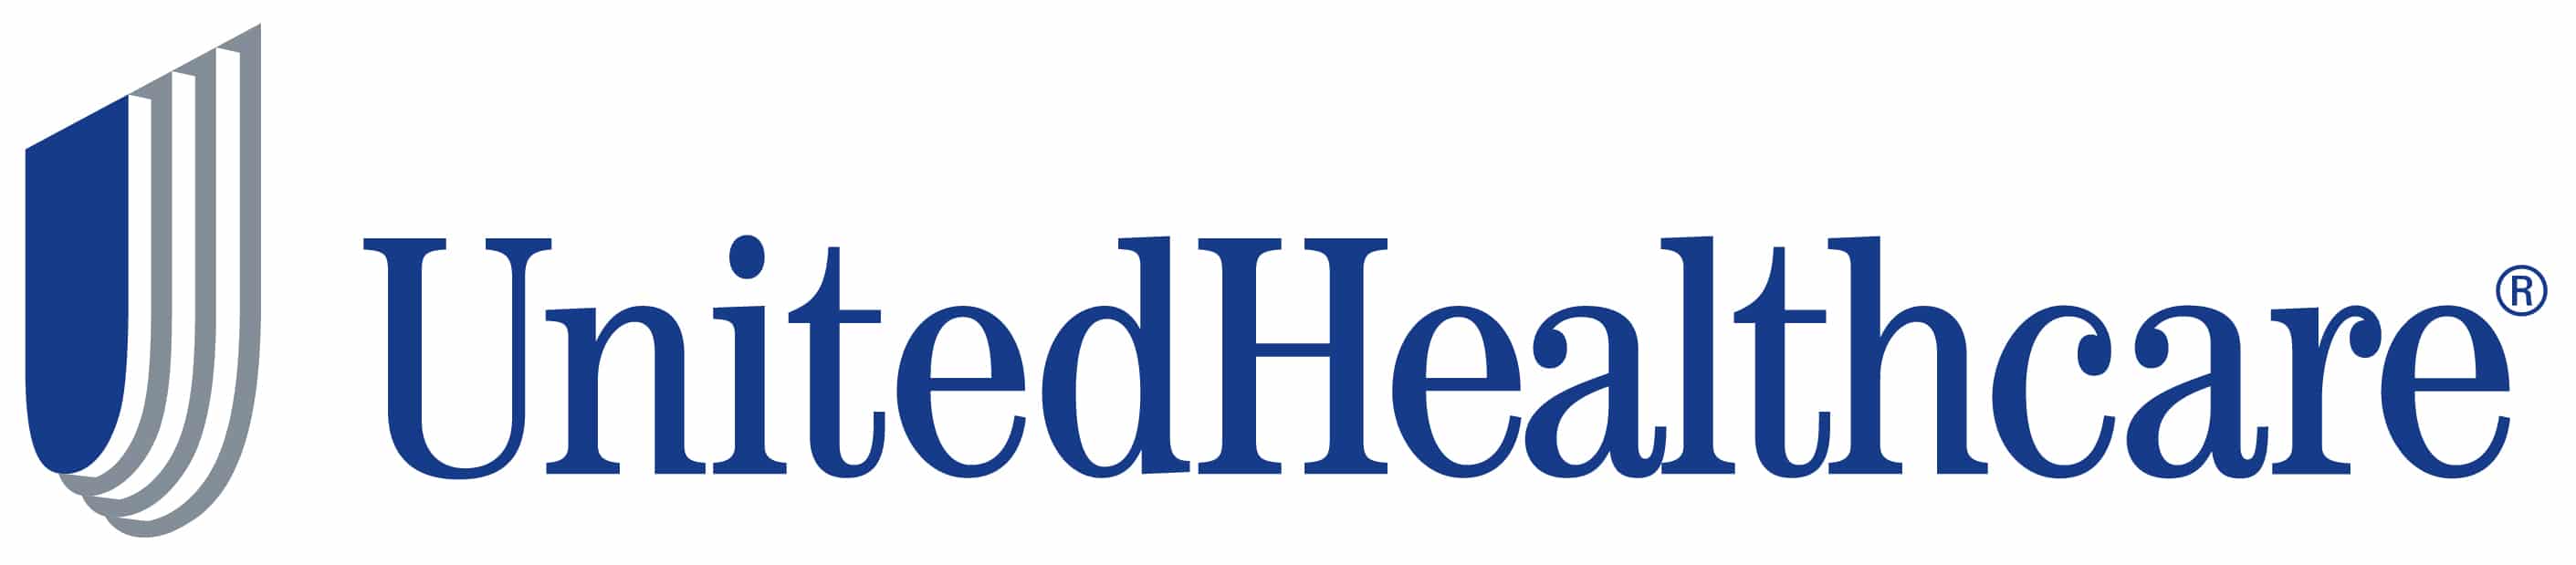 UnitedHealthcare_Logo-01